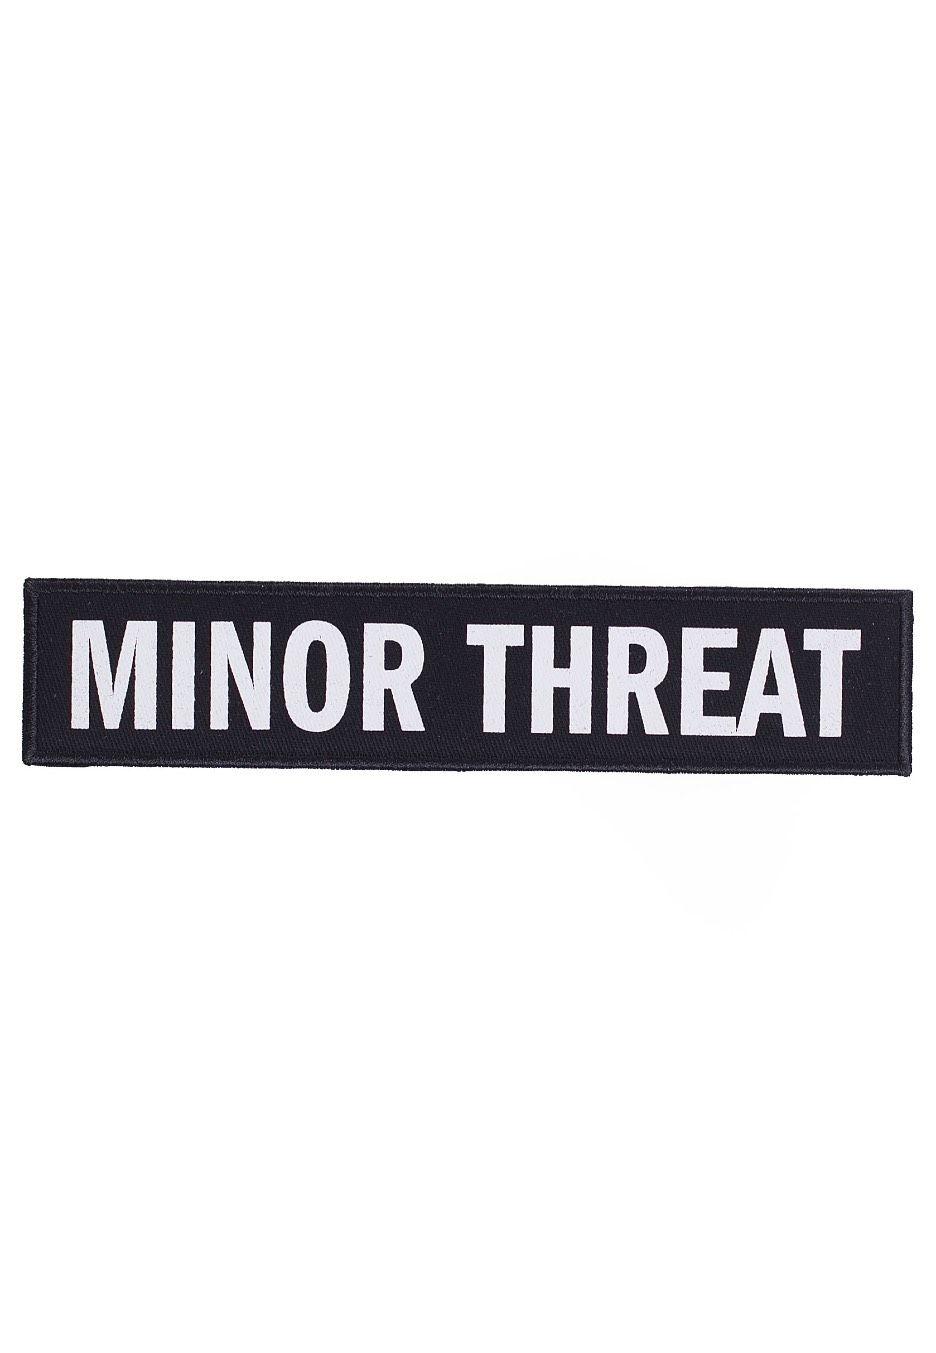 Minor Threat Logo - Minor Threat - Logo - Patch - Official Punk Merchandise Shop ...